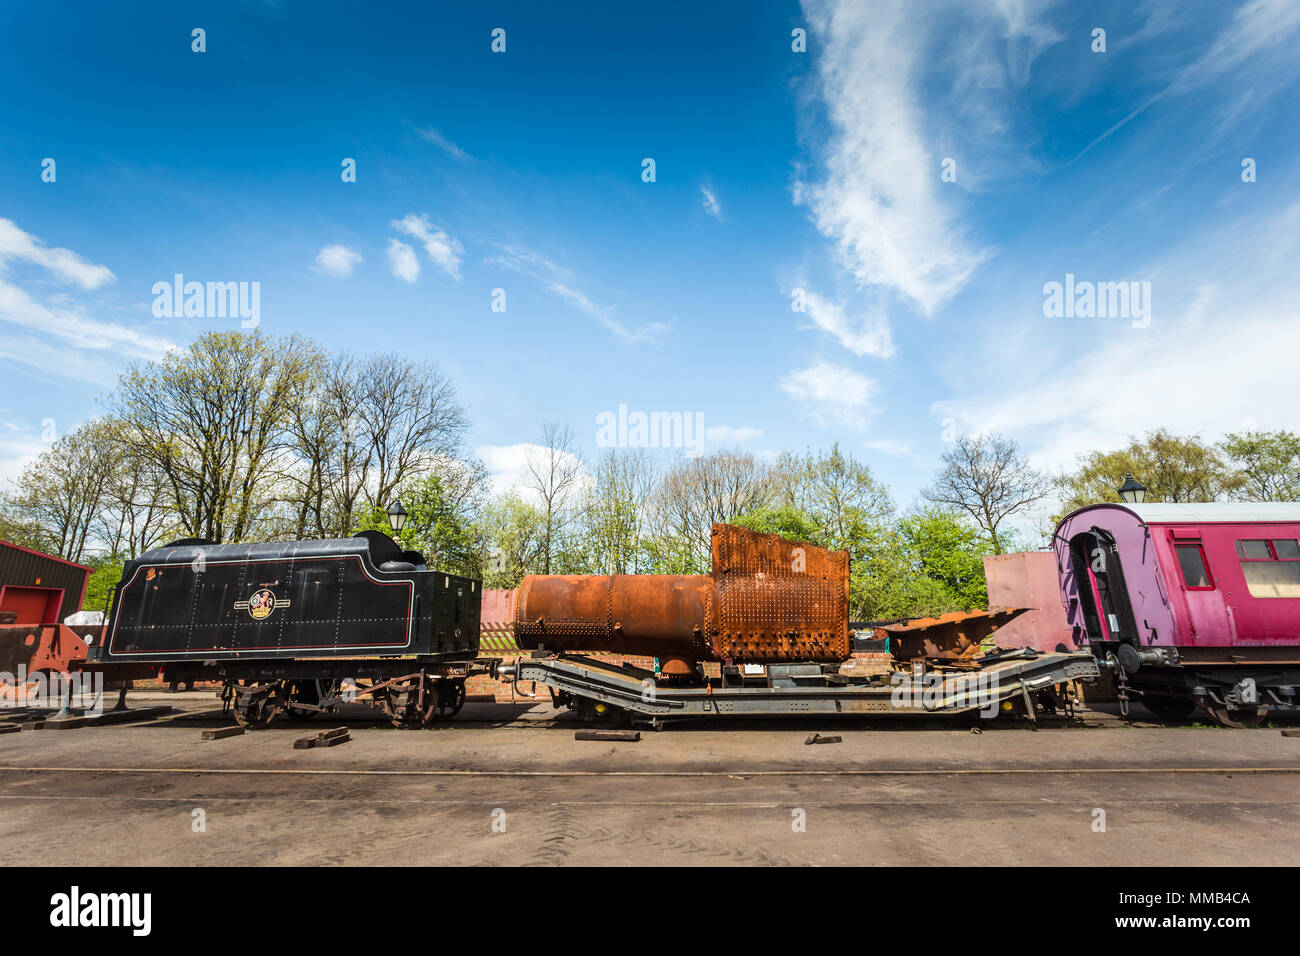 Old train, Midlands Railway Museum, UK Stock Photo